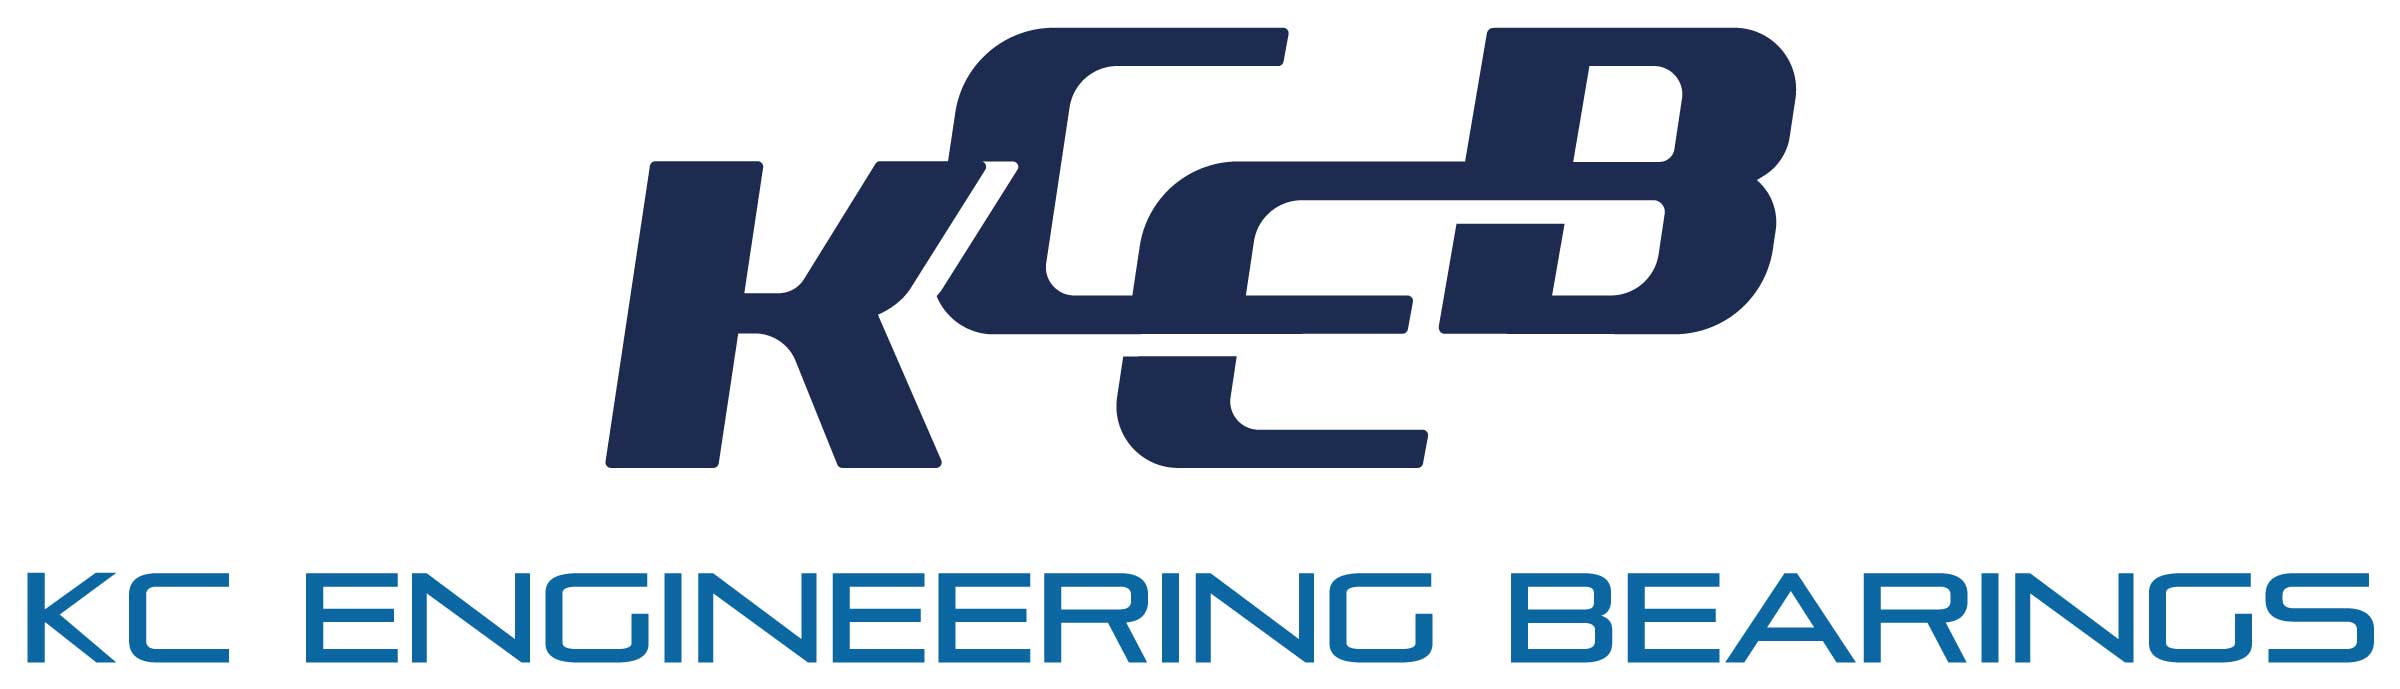 logo for K C Engineering Bearings Ltd